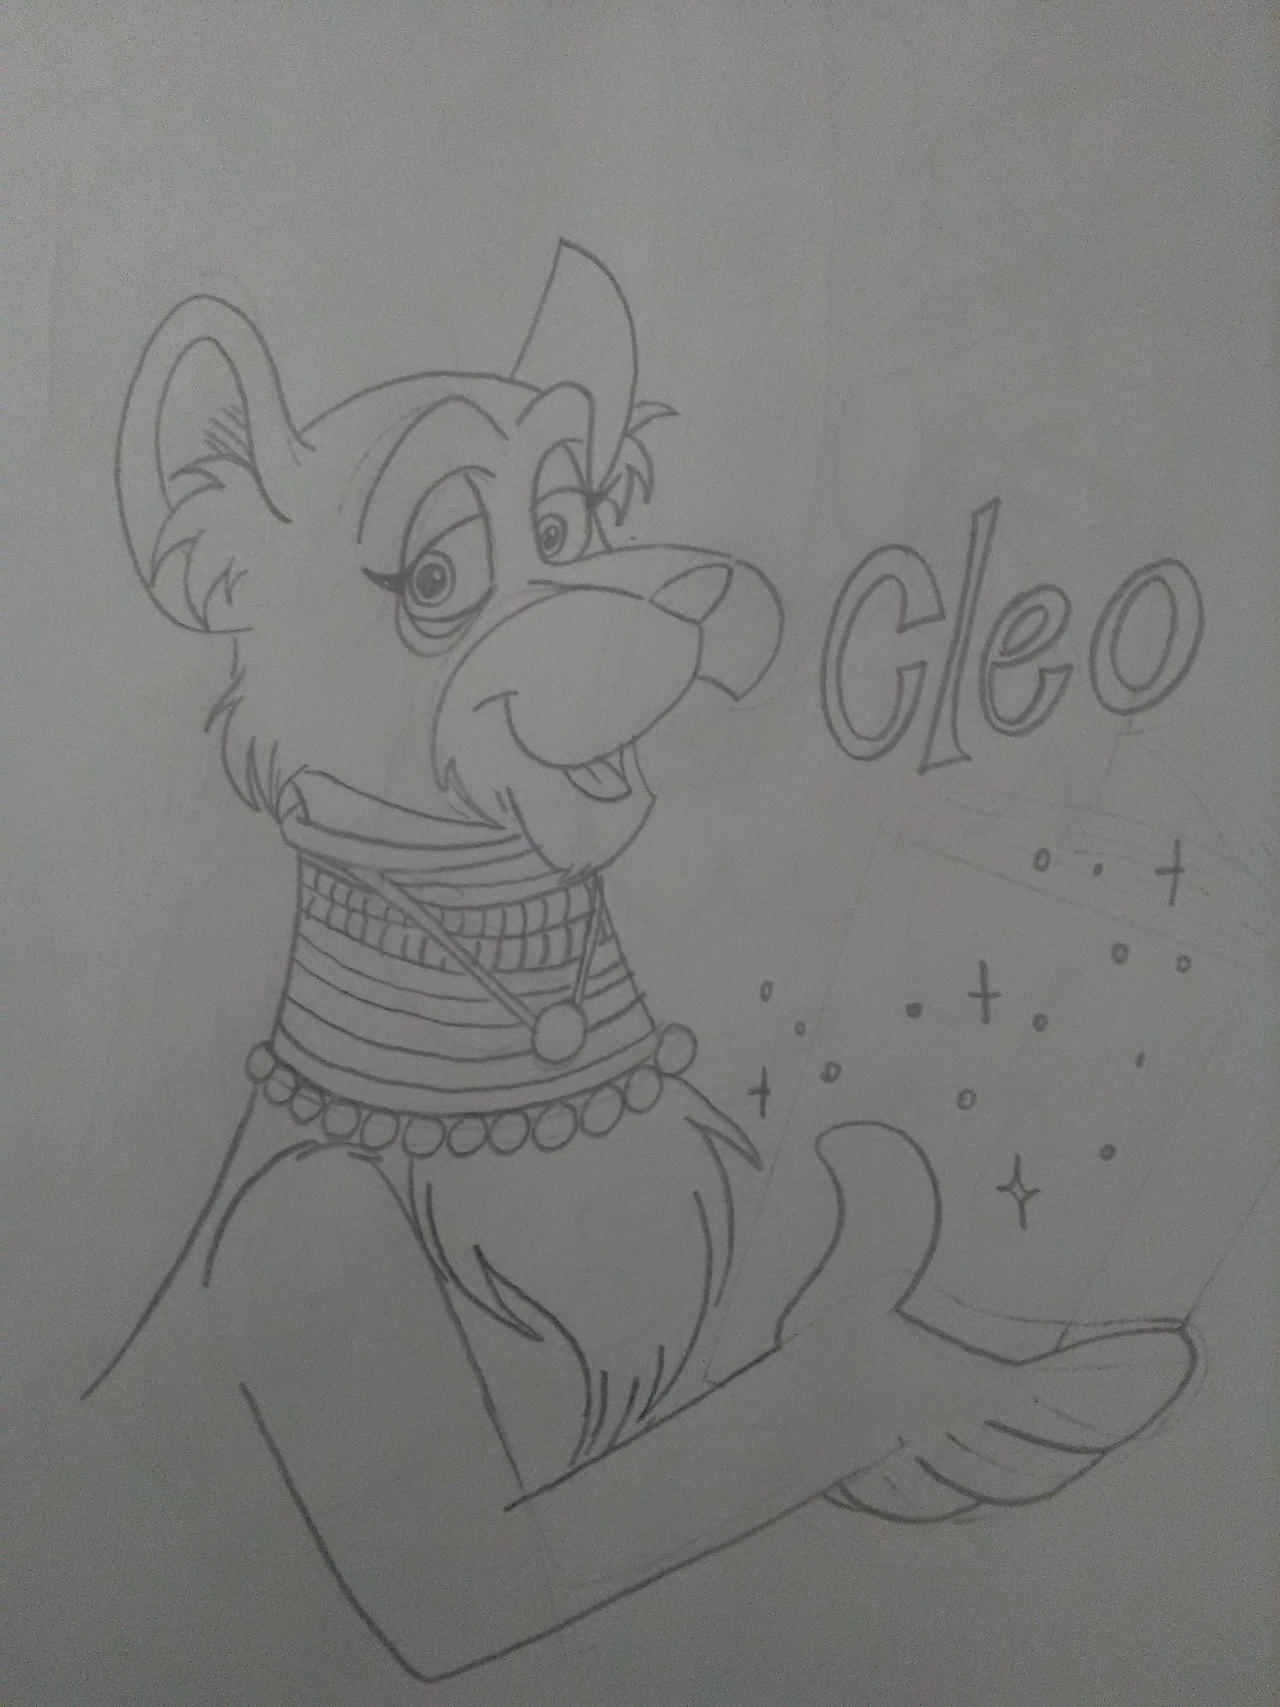 Cleo Sketch by princebluemoon3 on DeviantArt